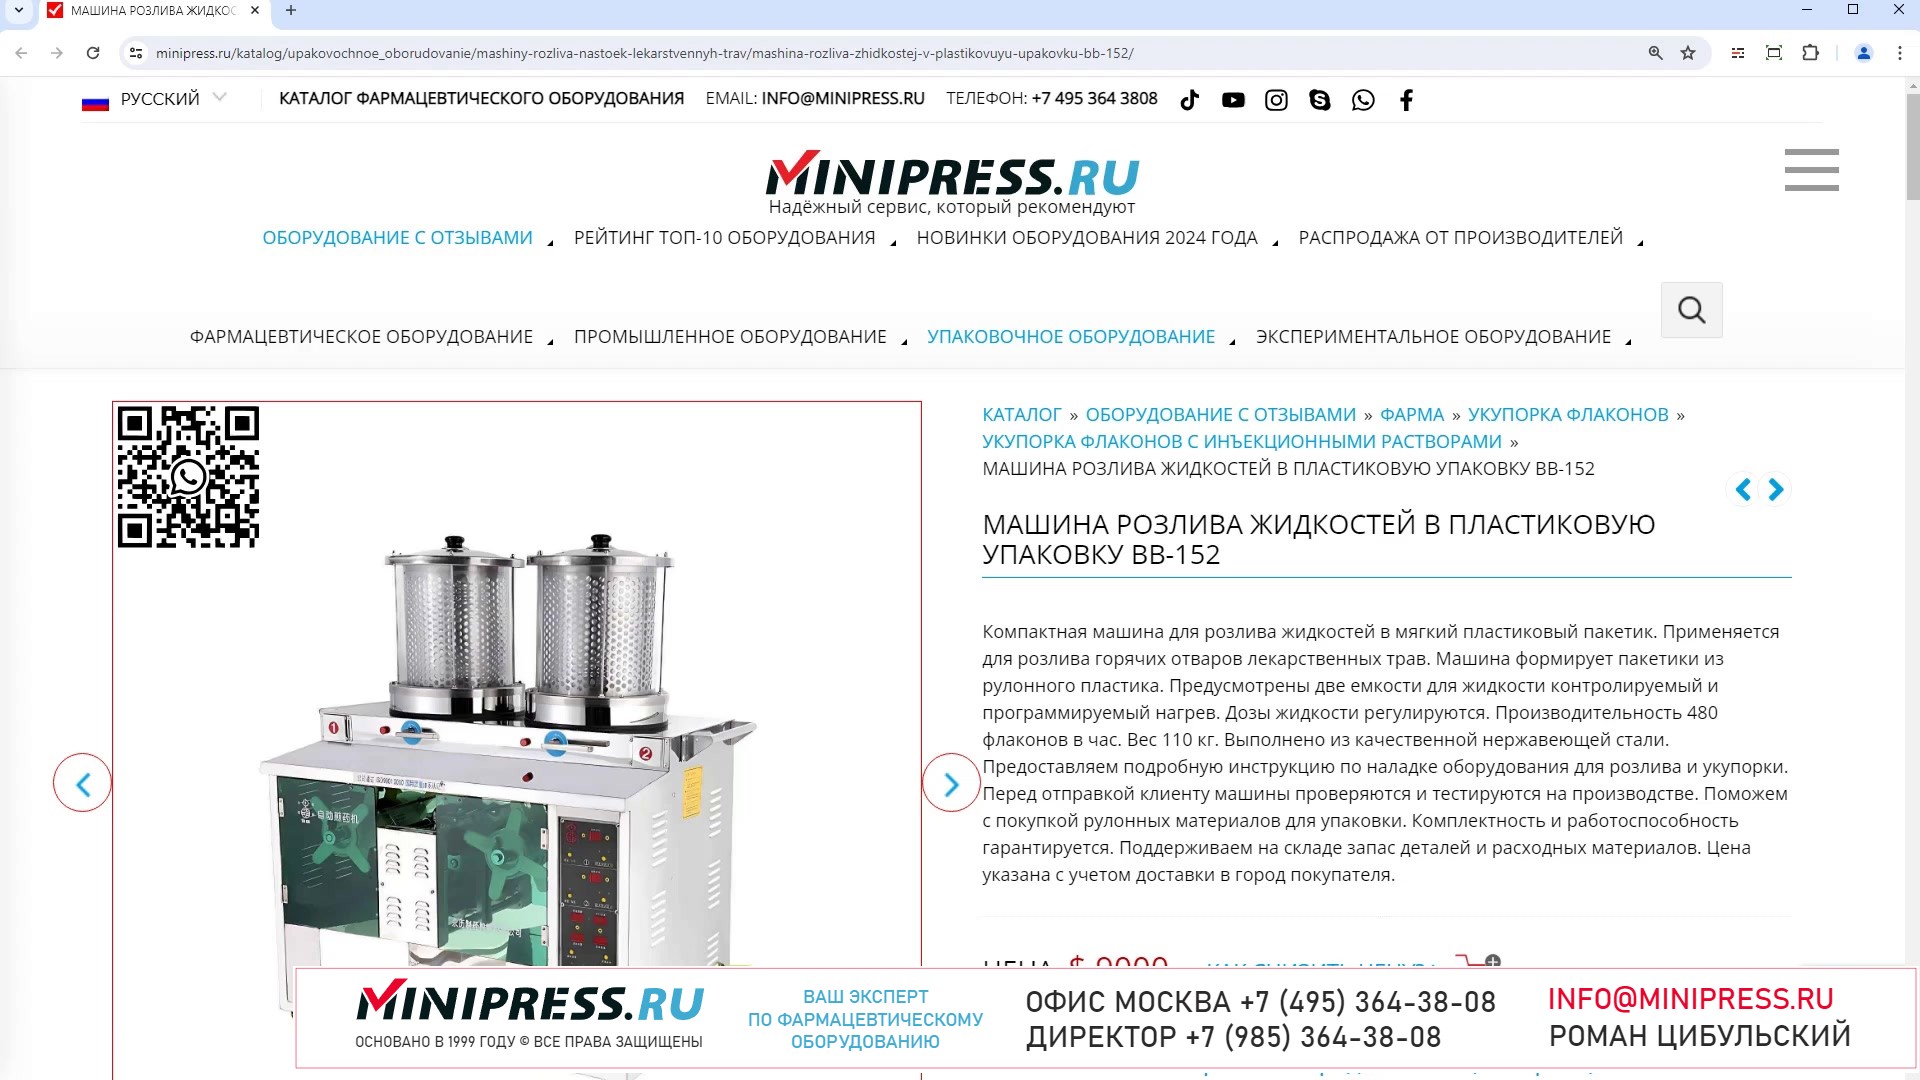 Minipress.ru Машина розлива жидкостей в пластиковую упаковку  BB-152